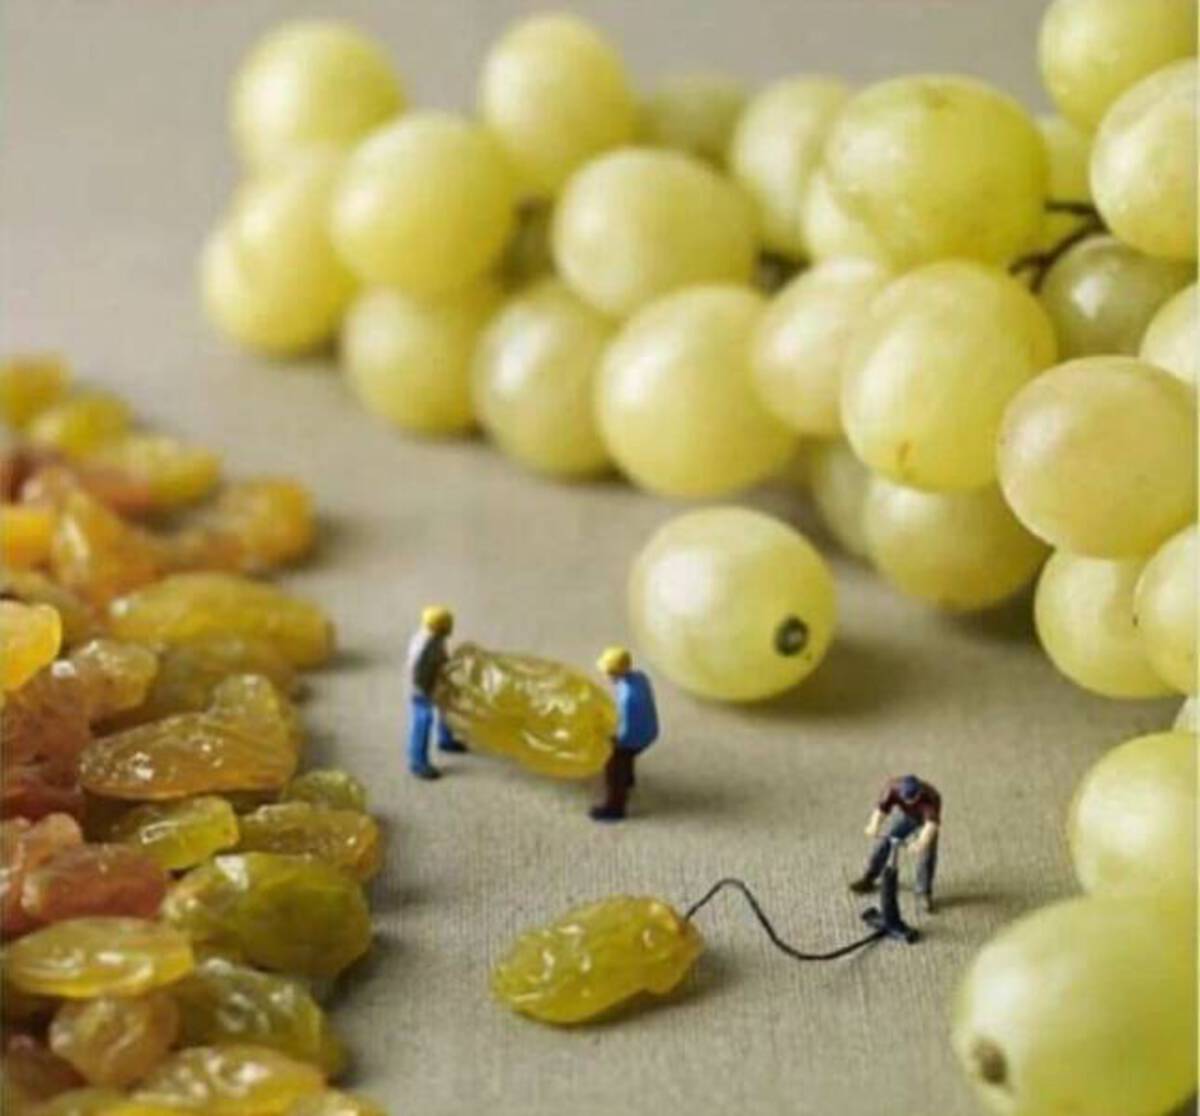 grapes made